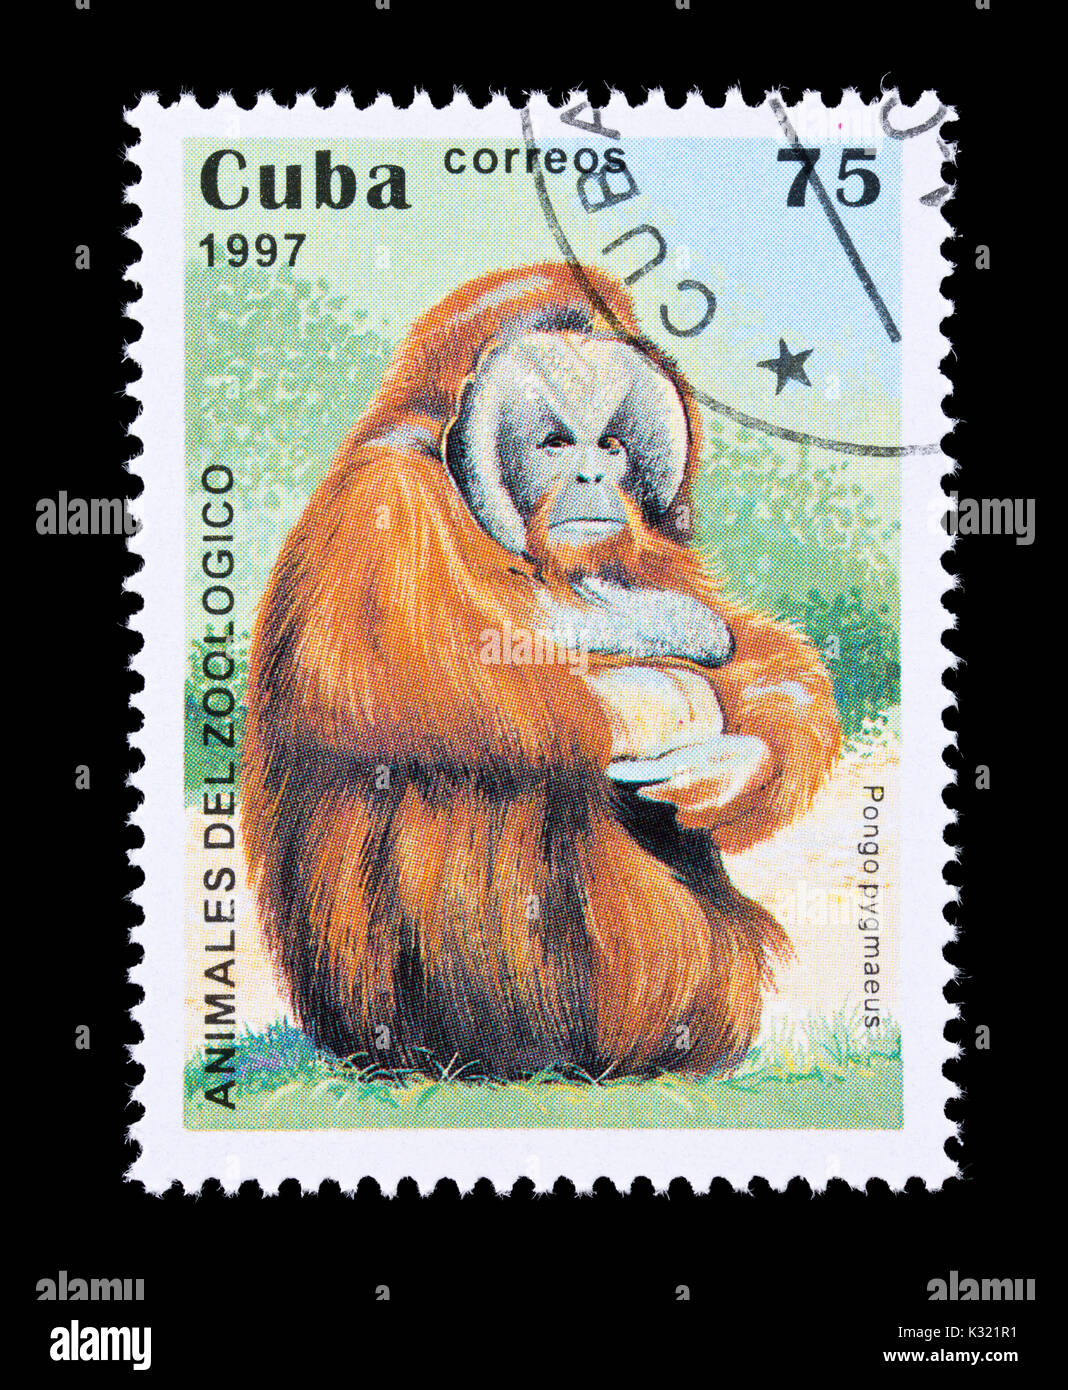 Postage stamp from Cuba depicting a Bornean orangutan (Pongo pygmaeus) Stock Photo